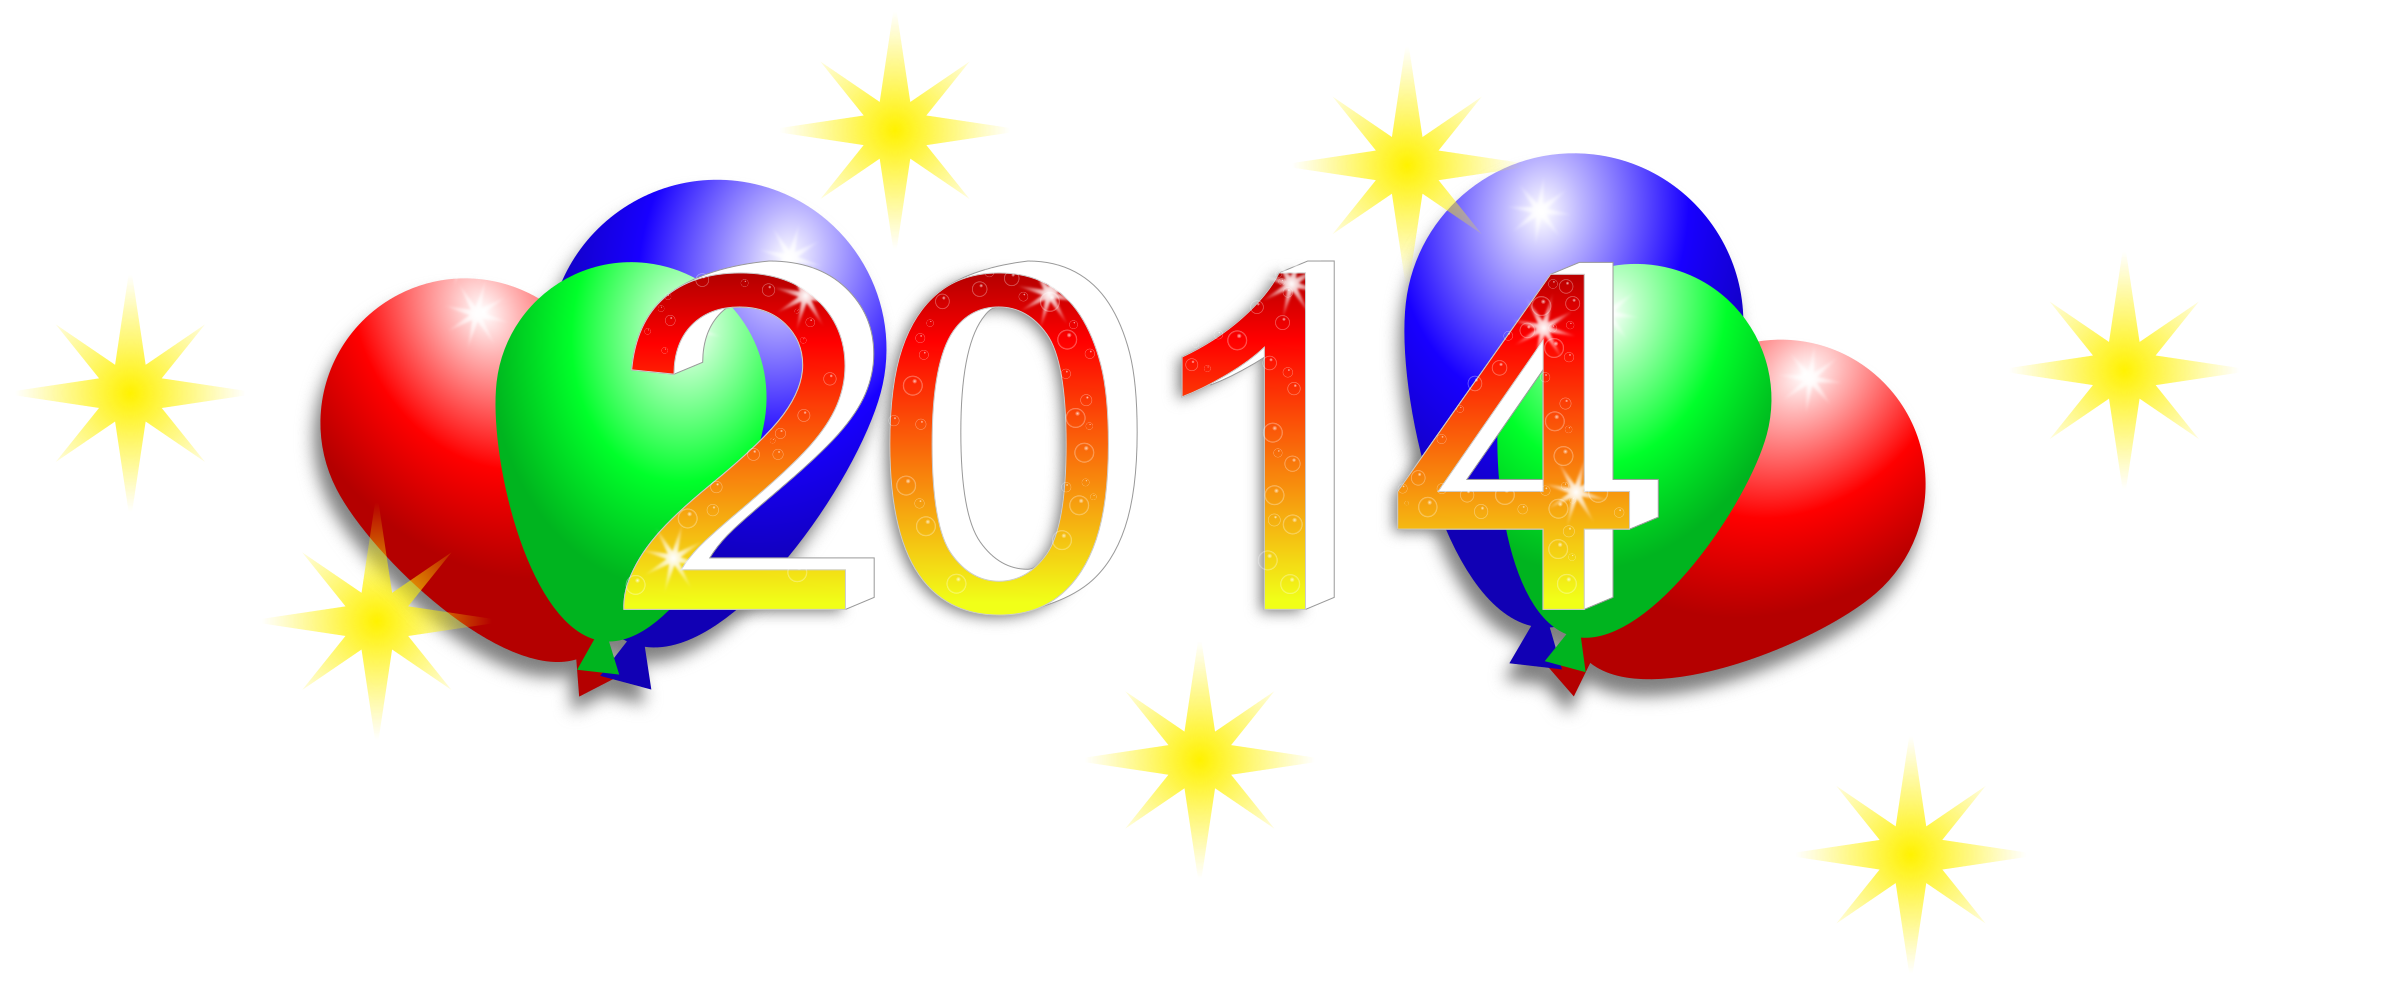 clipart happy new years 2014 - photo #2